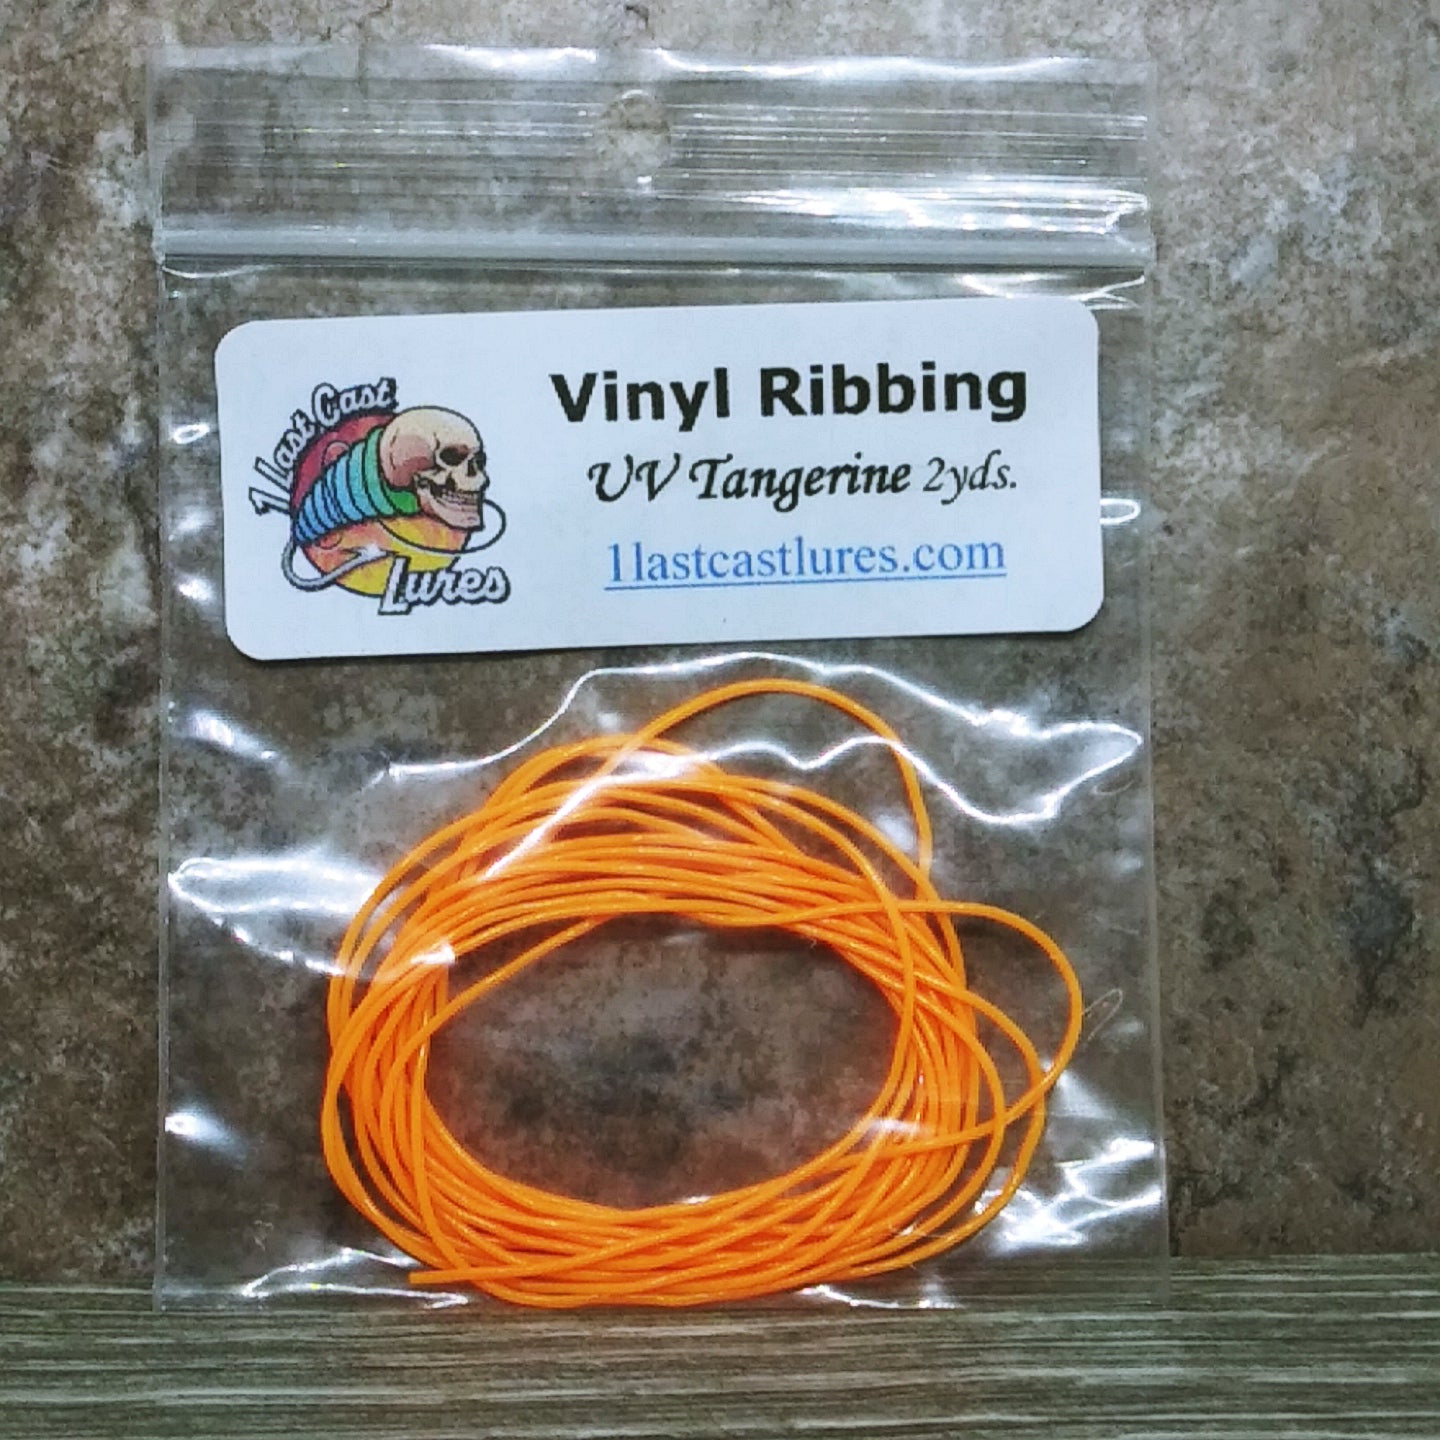 UV Tangerine Vinyl Ribbing